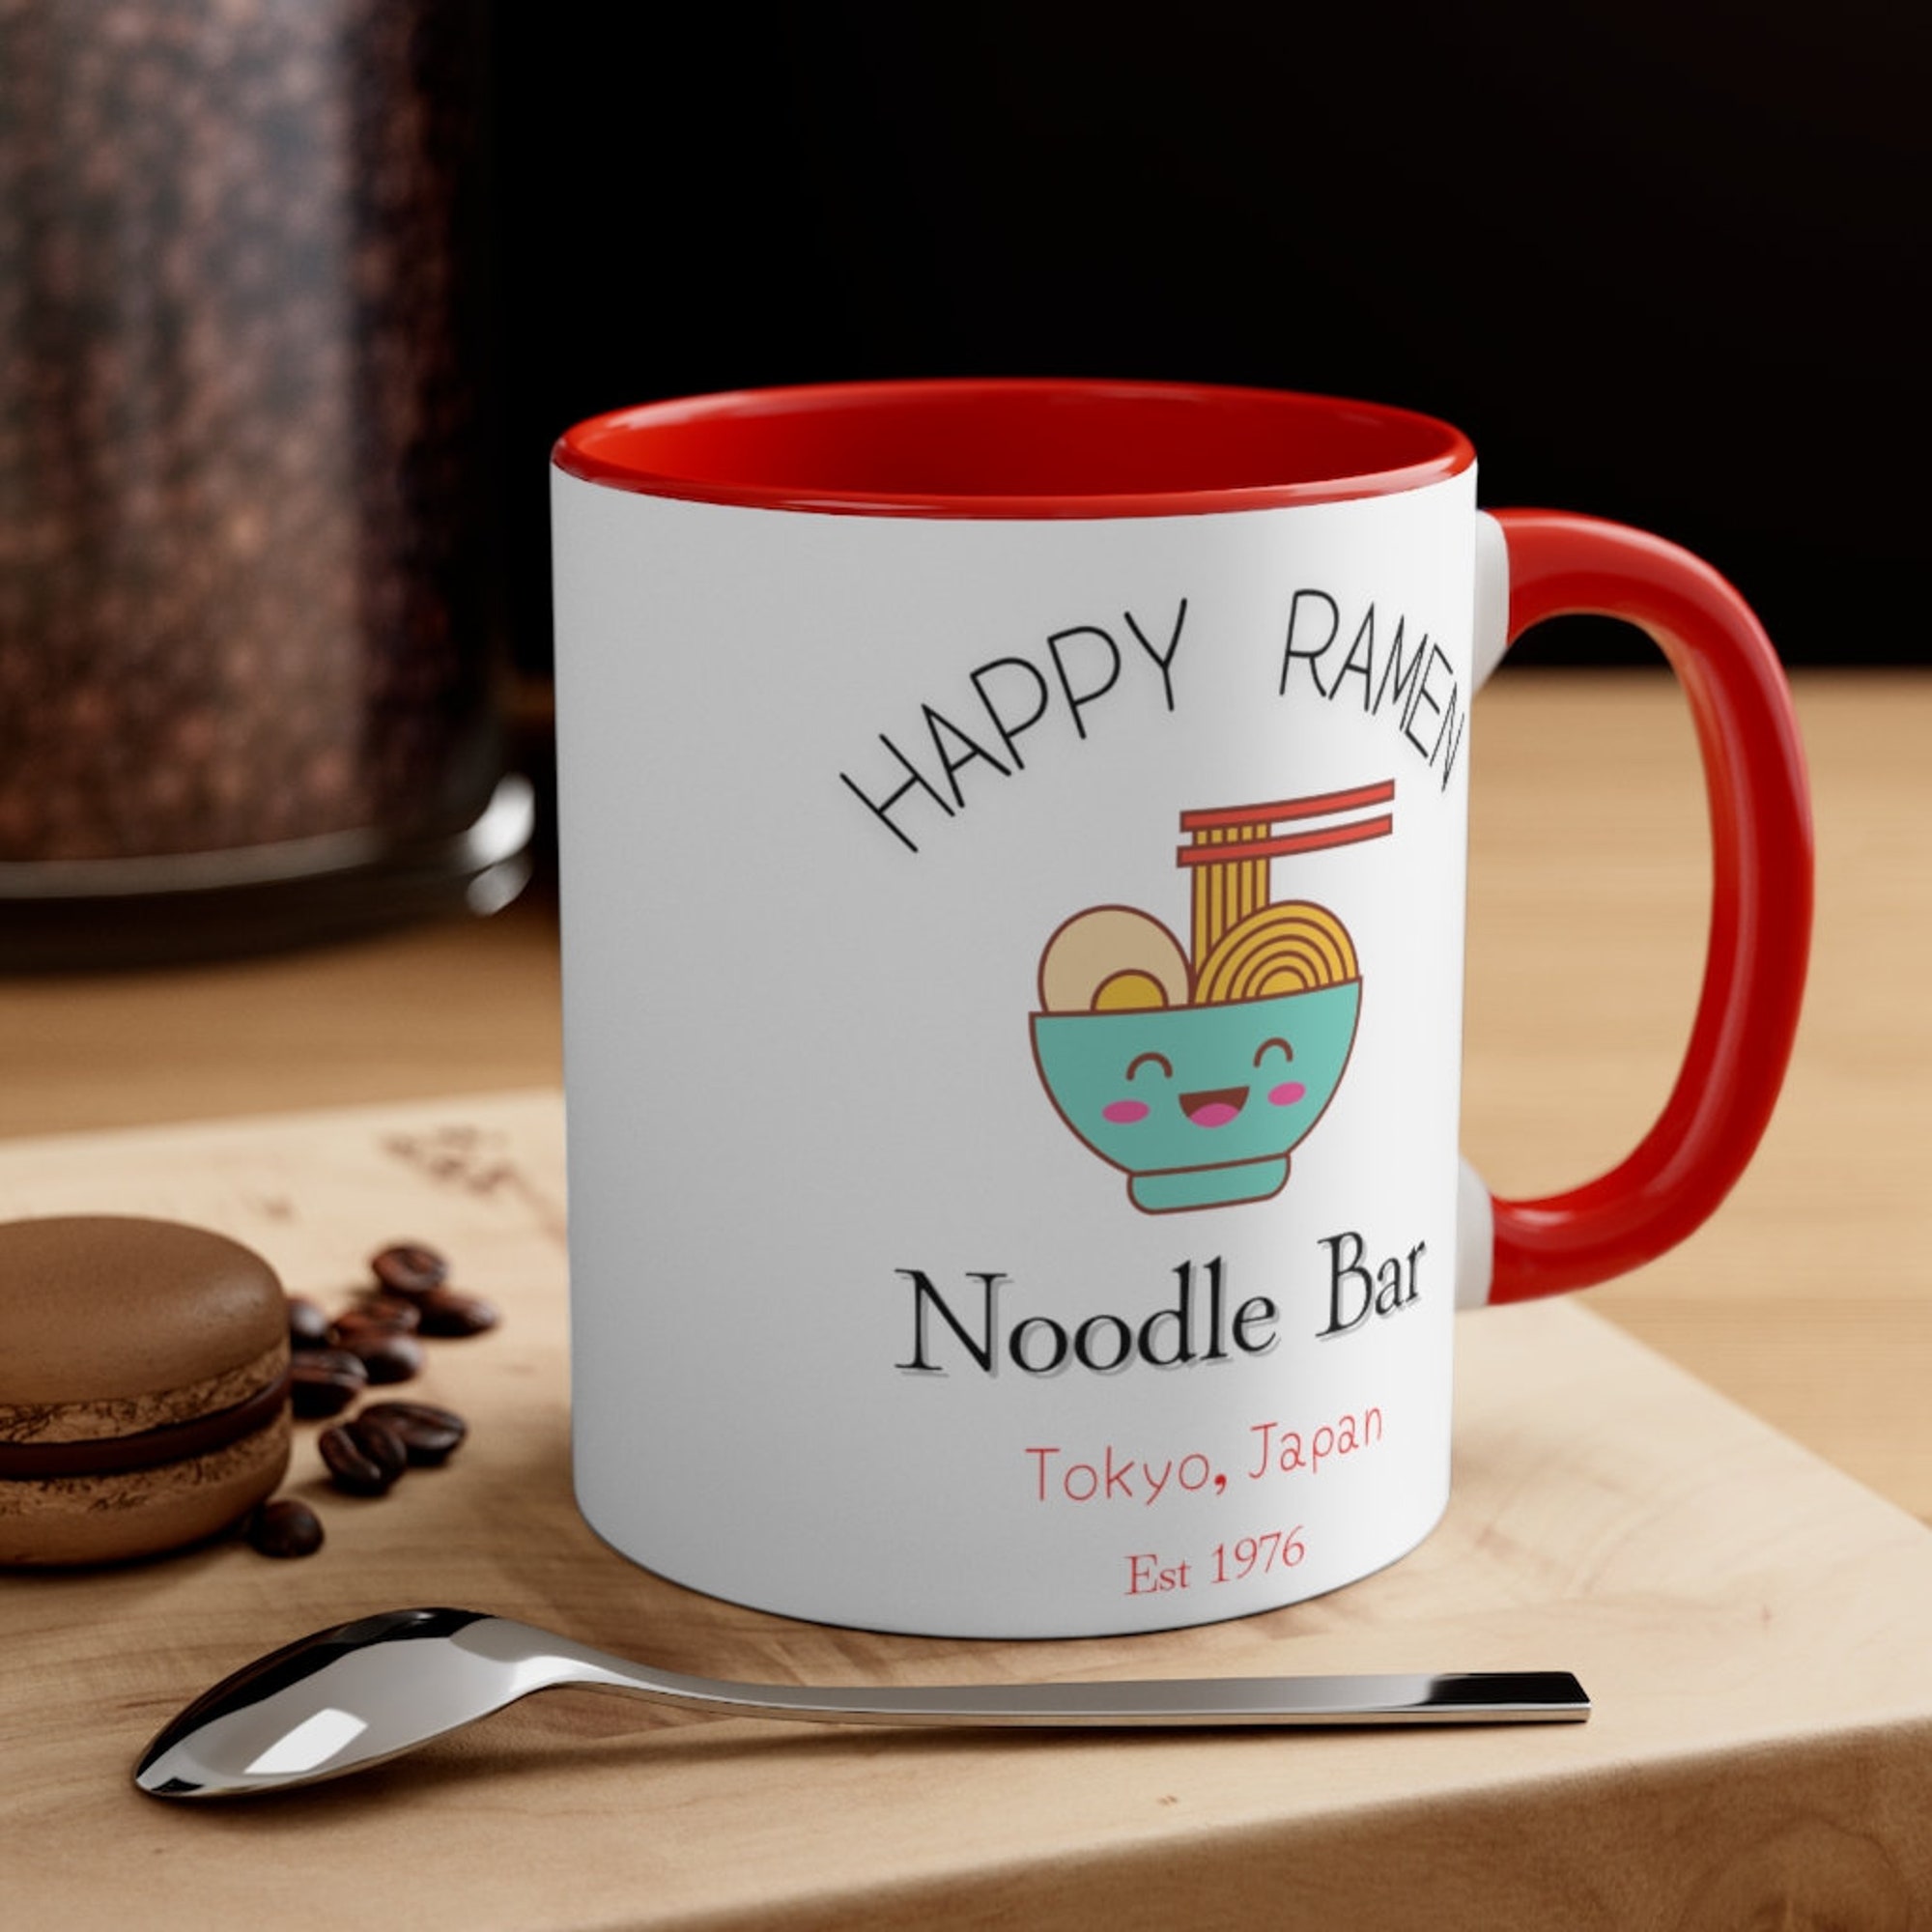 Discover Happy Ramen Noodle Bar Accent Coffee Mug